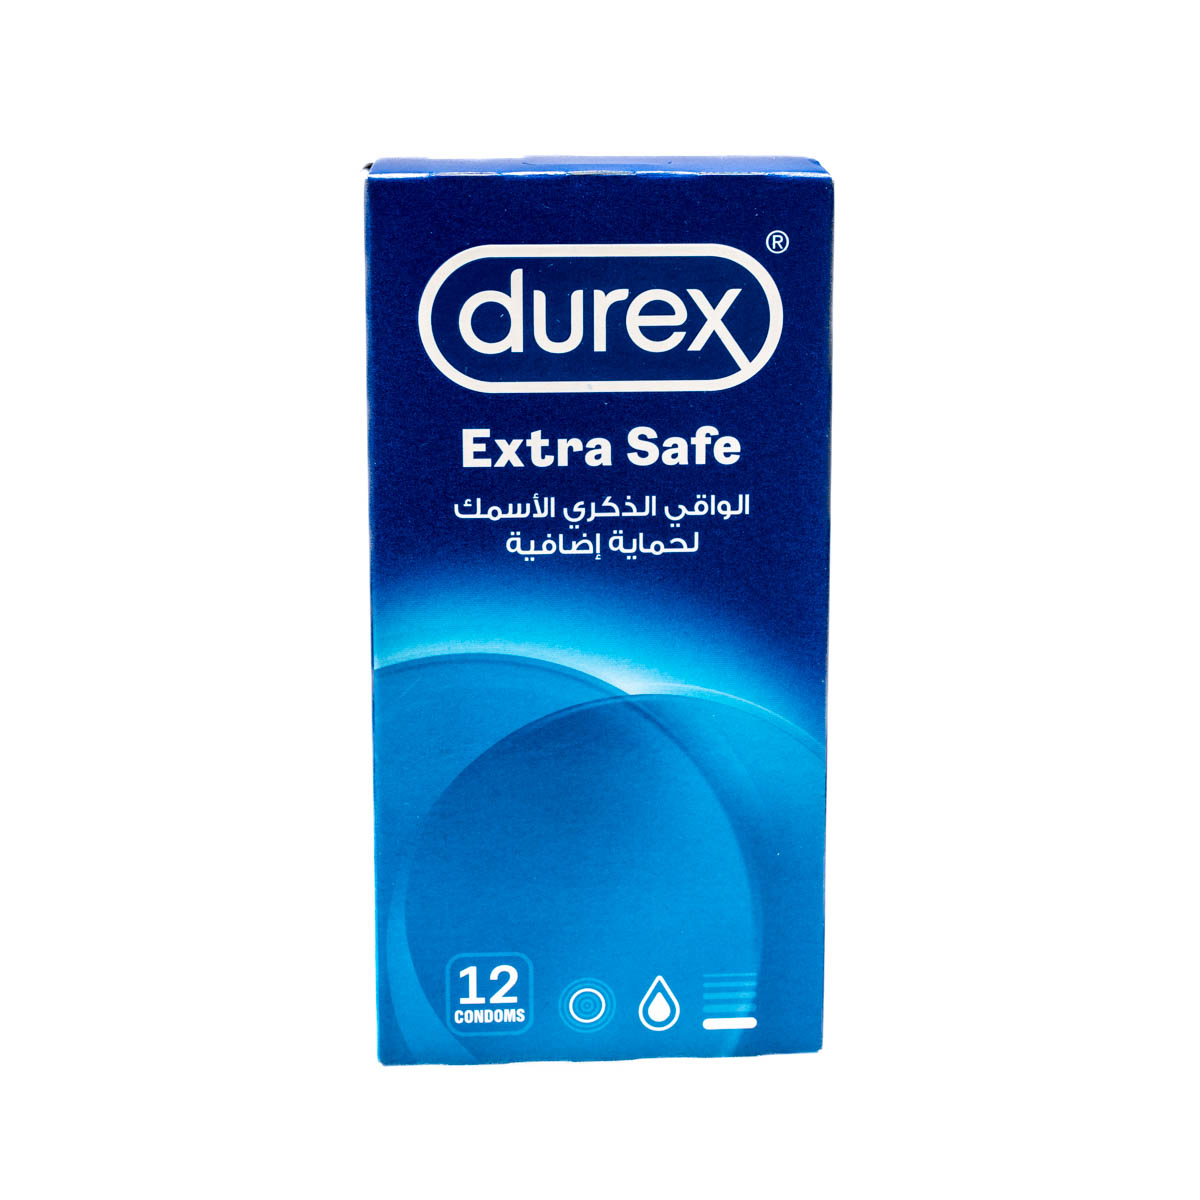 Durex Invisible Extra Thin & Sensitive Condoms 12pcs